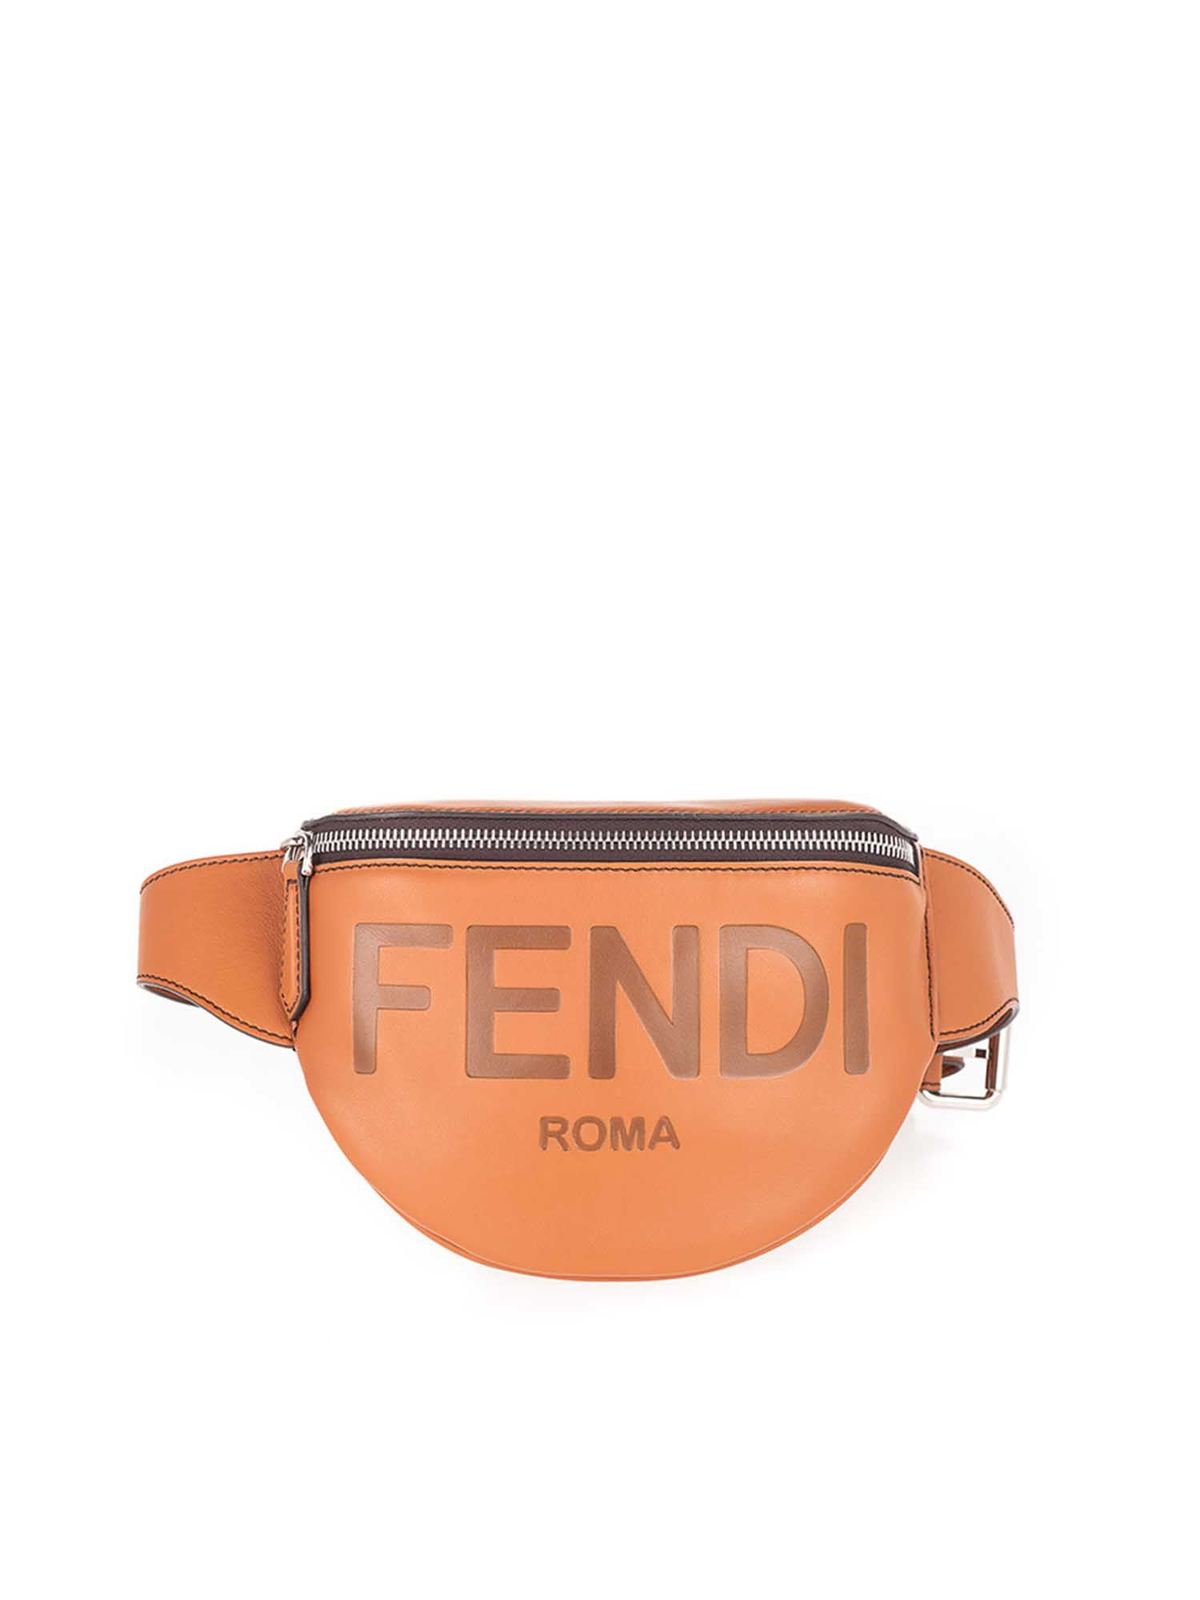 FENDI FENDI ROMA BELT BAG IN BROWN